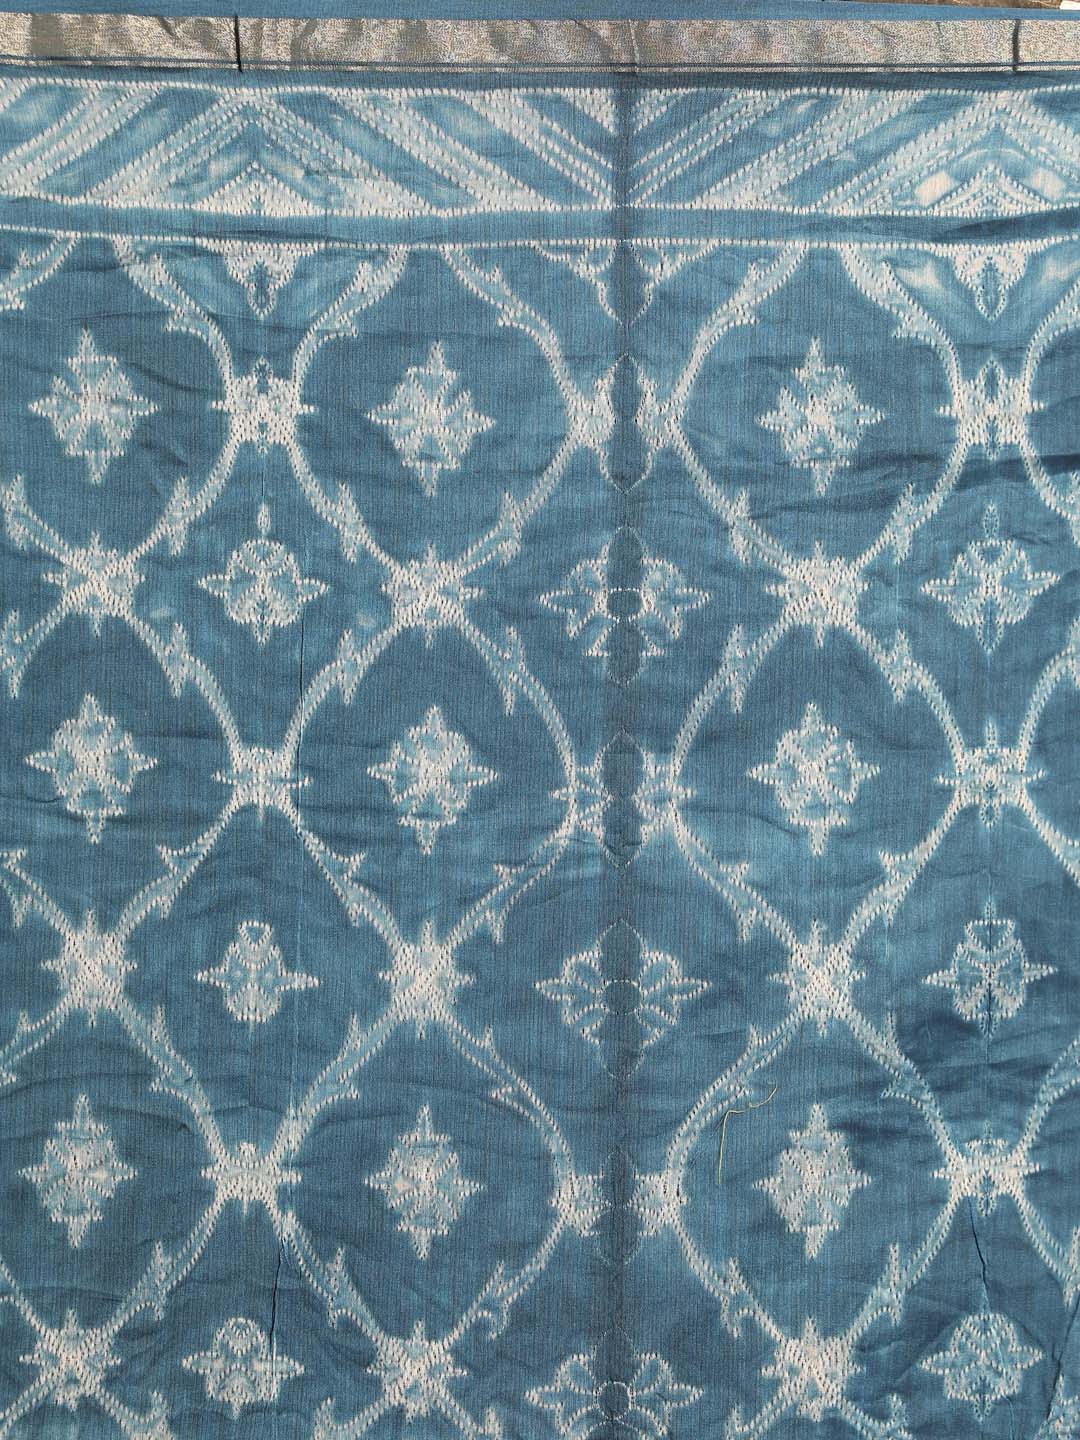 Indethnic Shibori Silk Cotton Saree in Blue - Saree Detail View